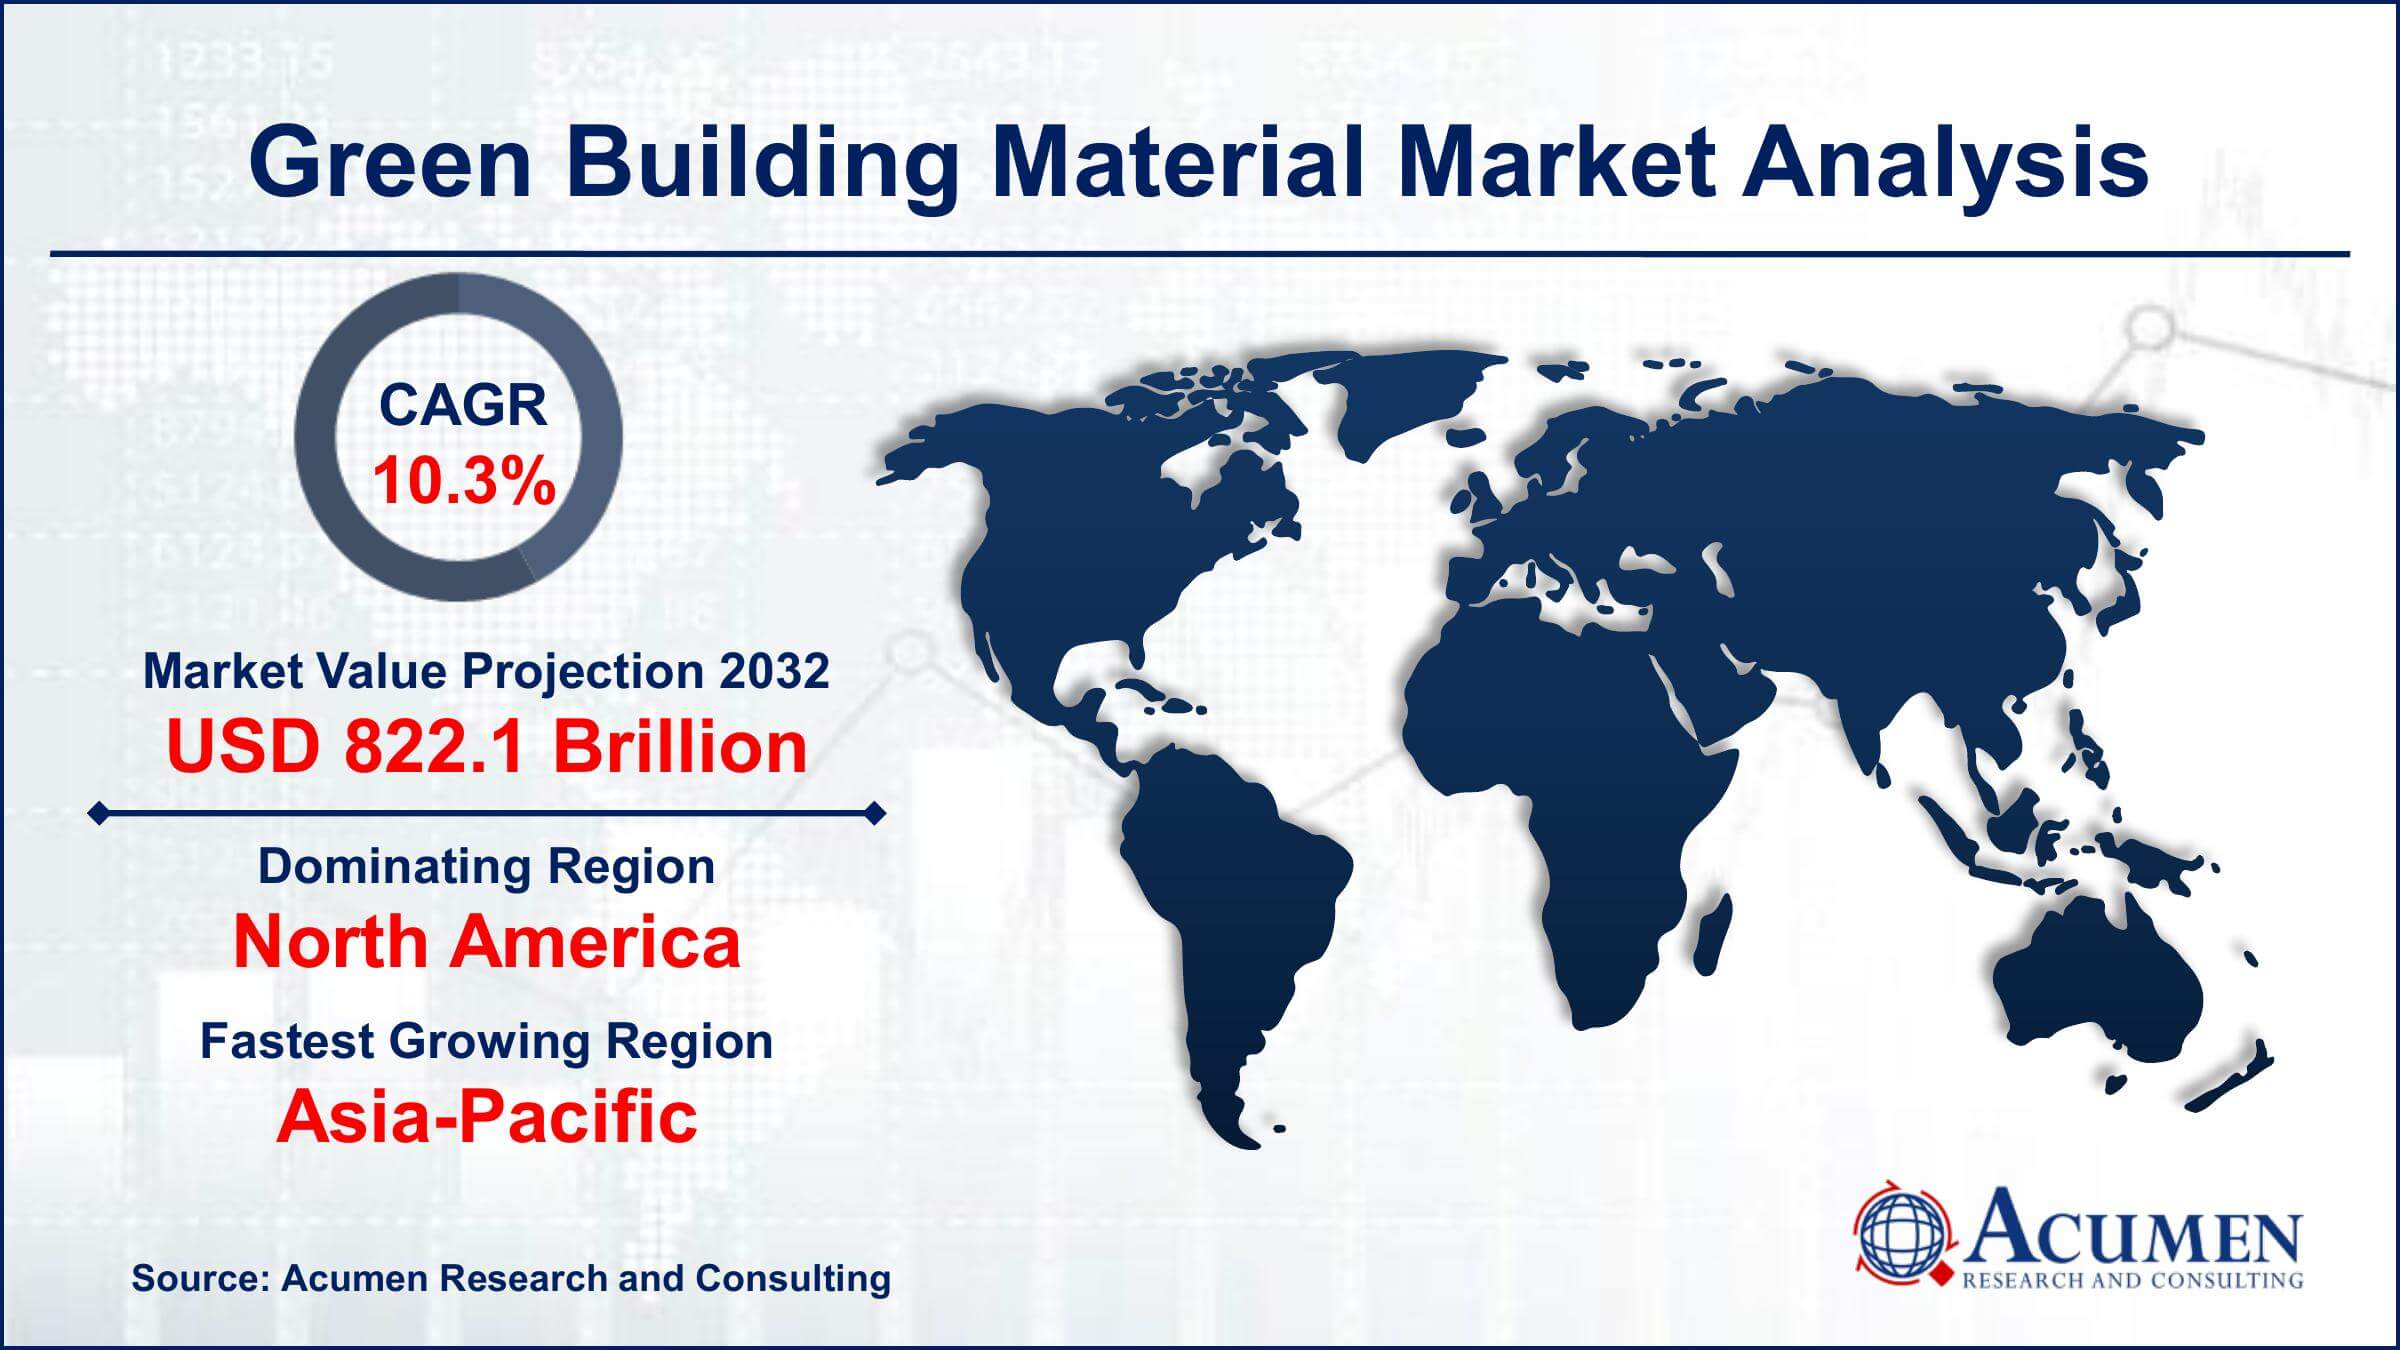 Global Green Building Material Market Trends